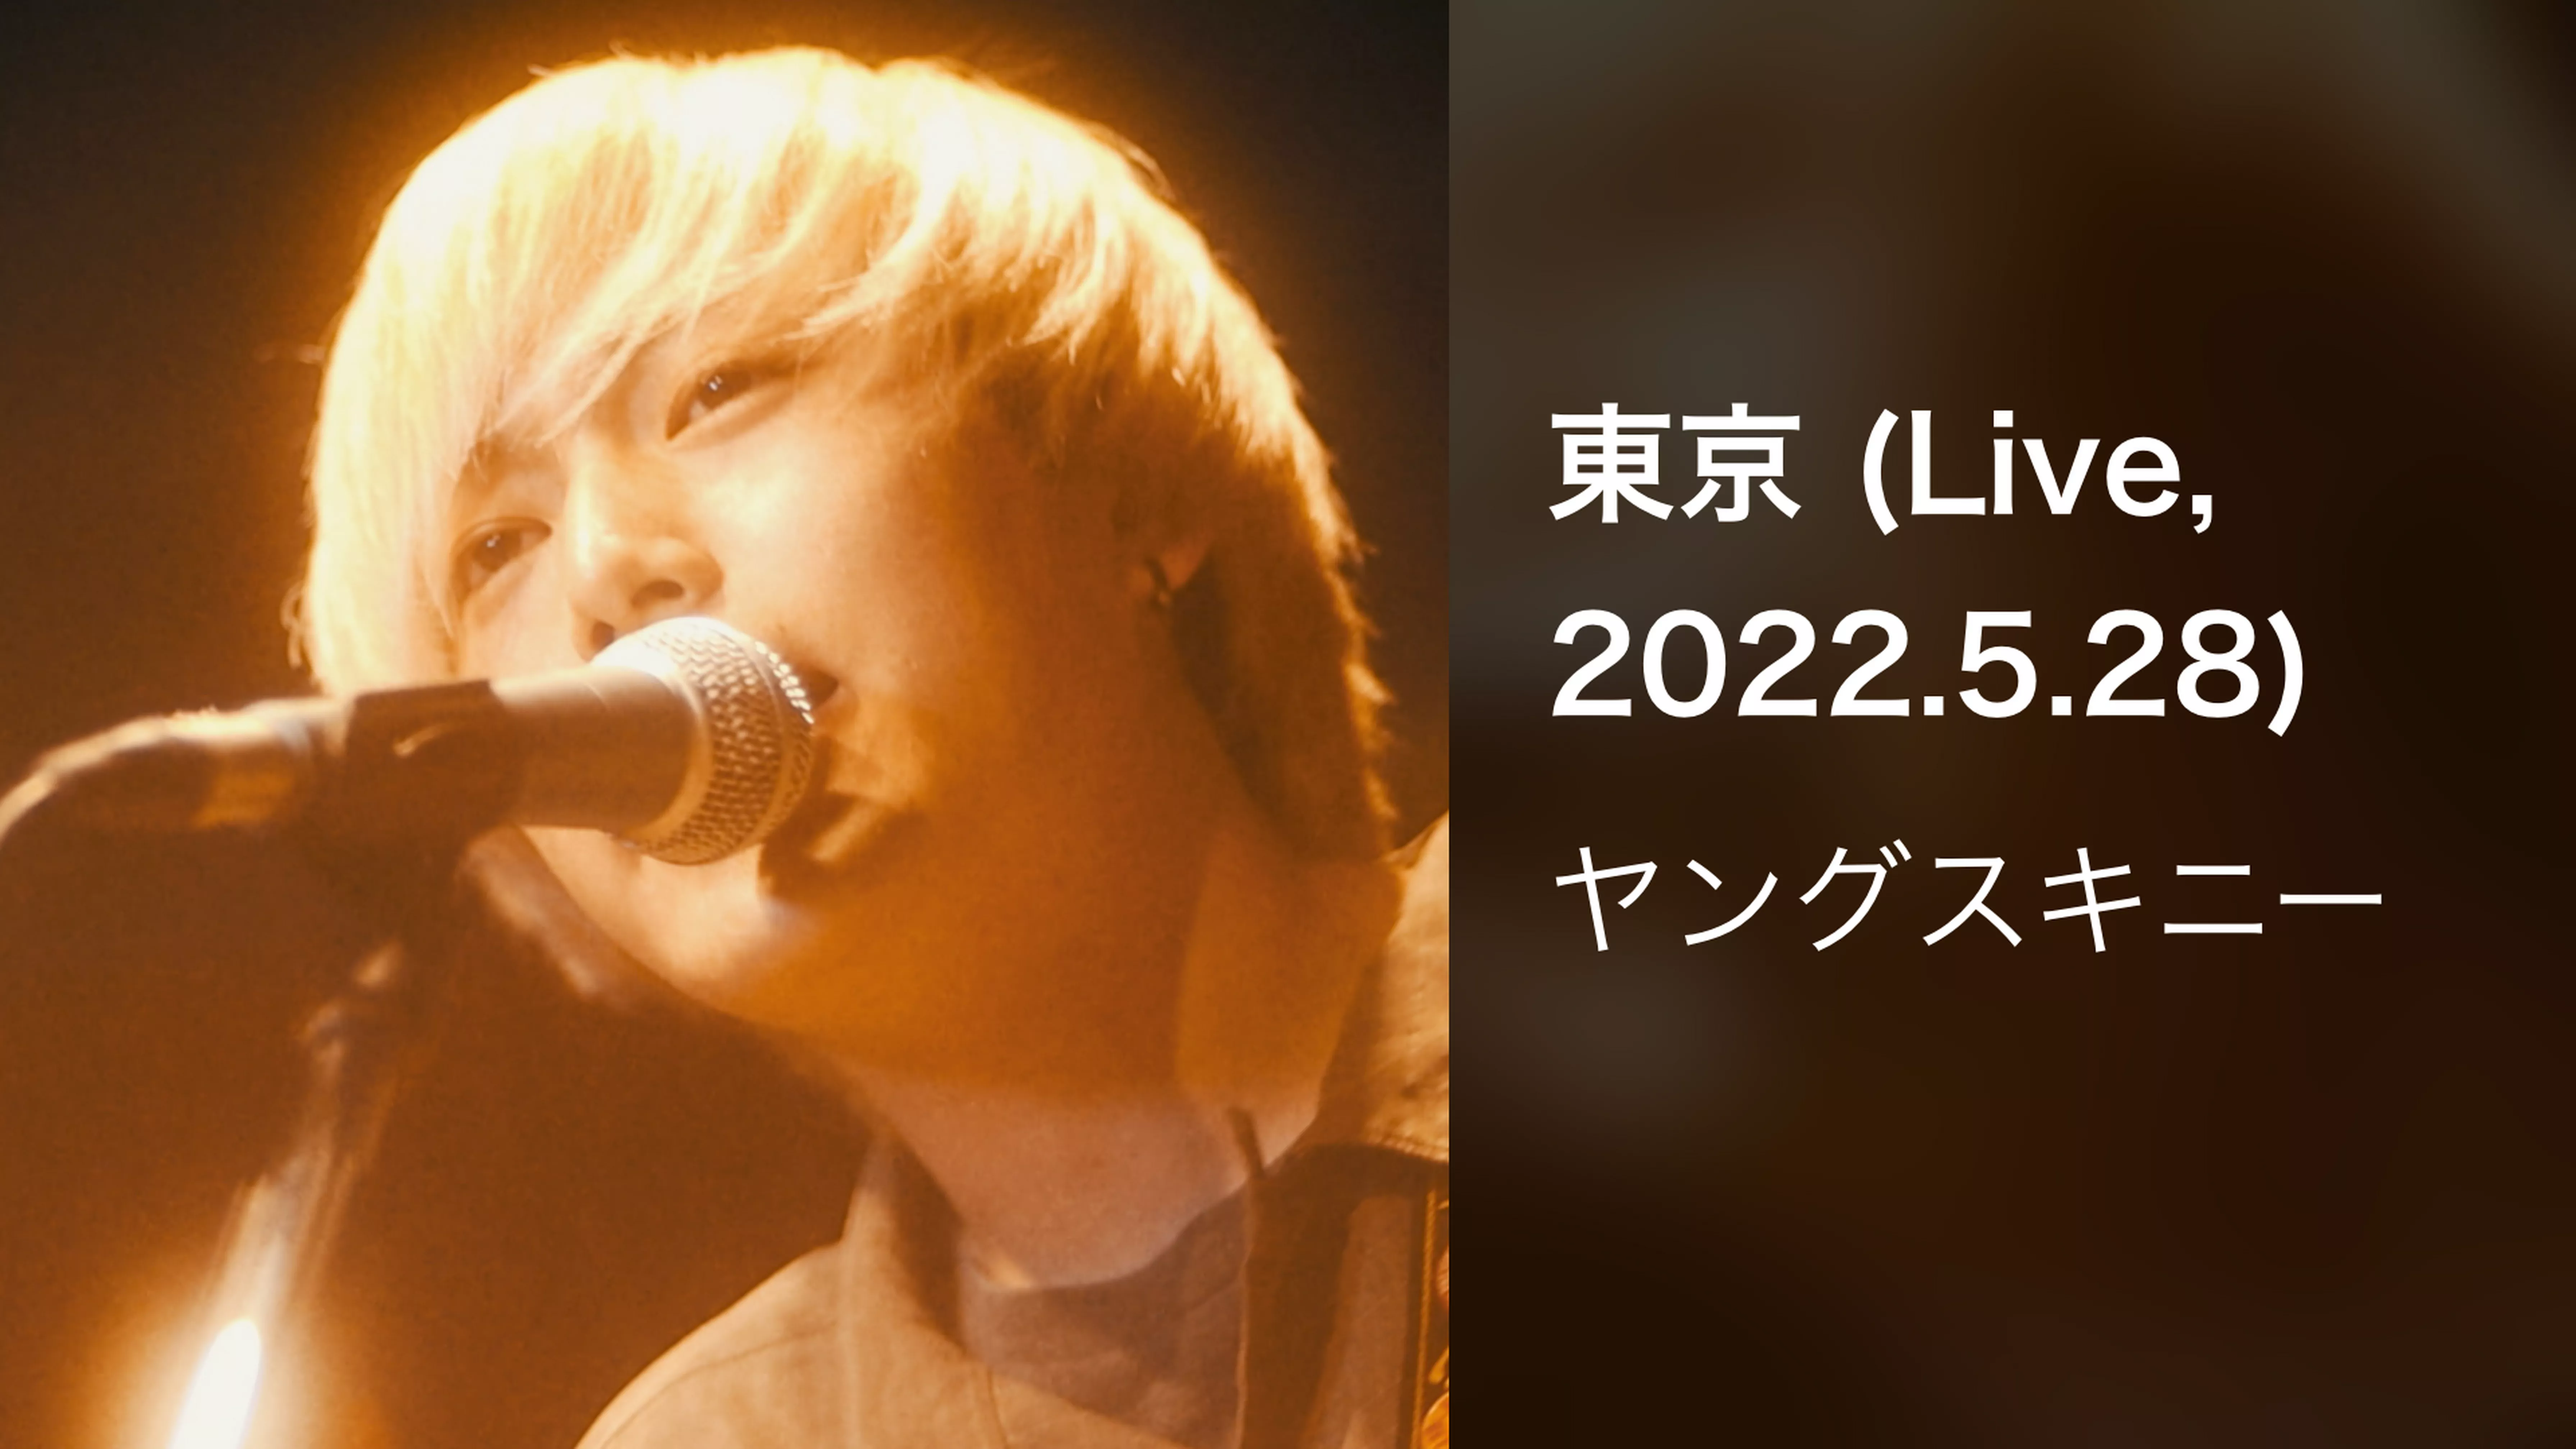 東京 (Live, 2022.5.28)